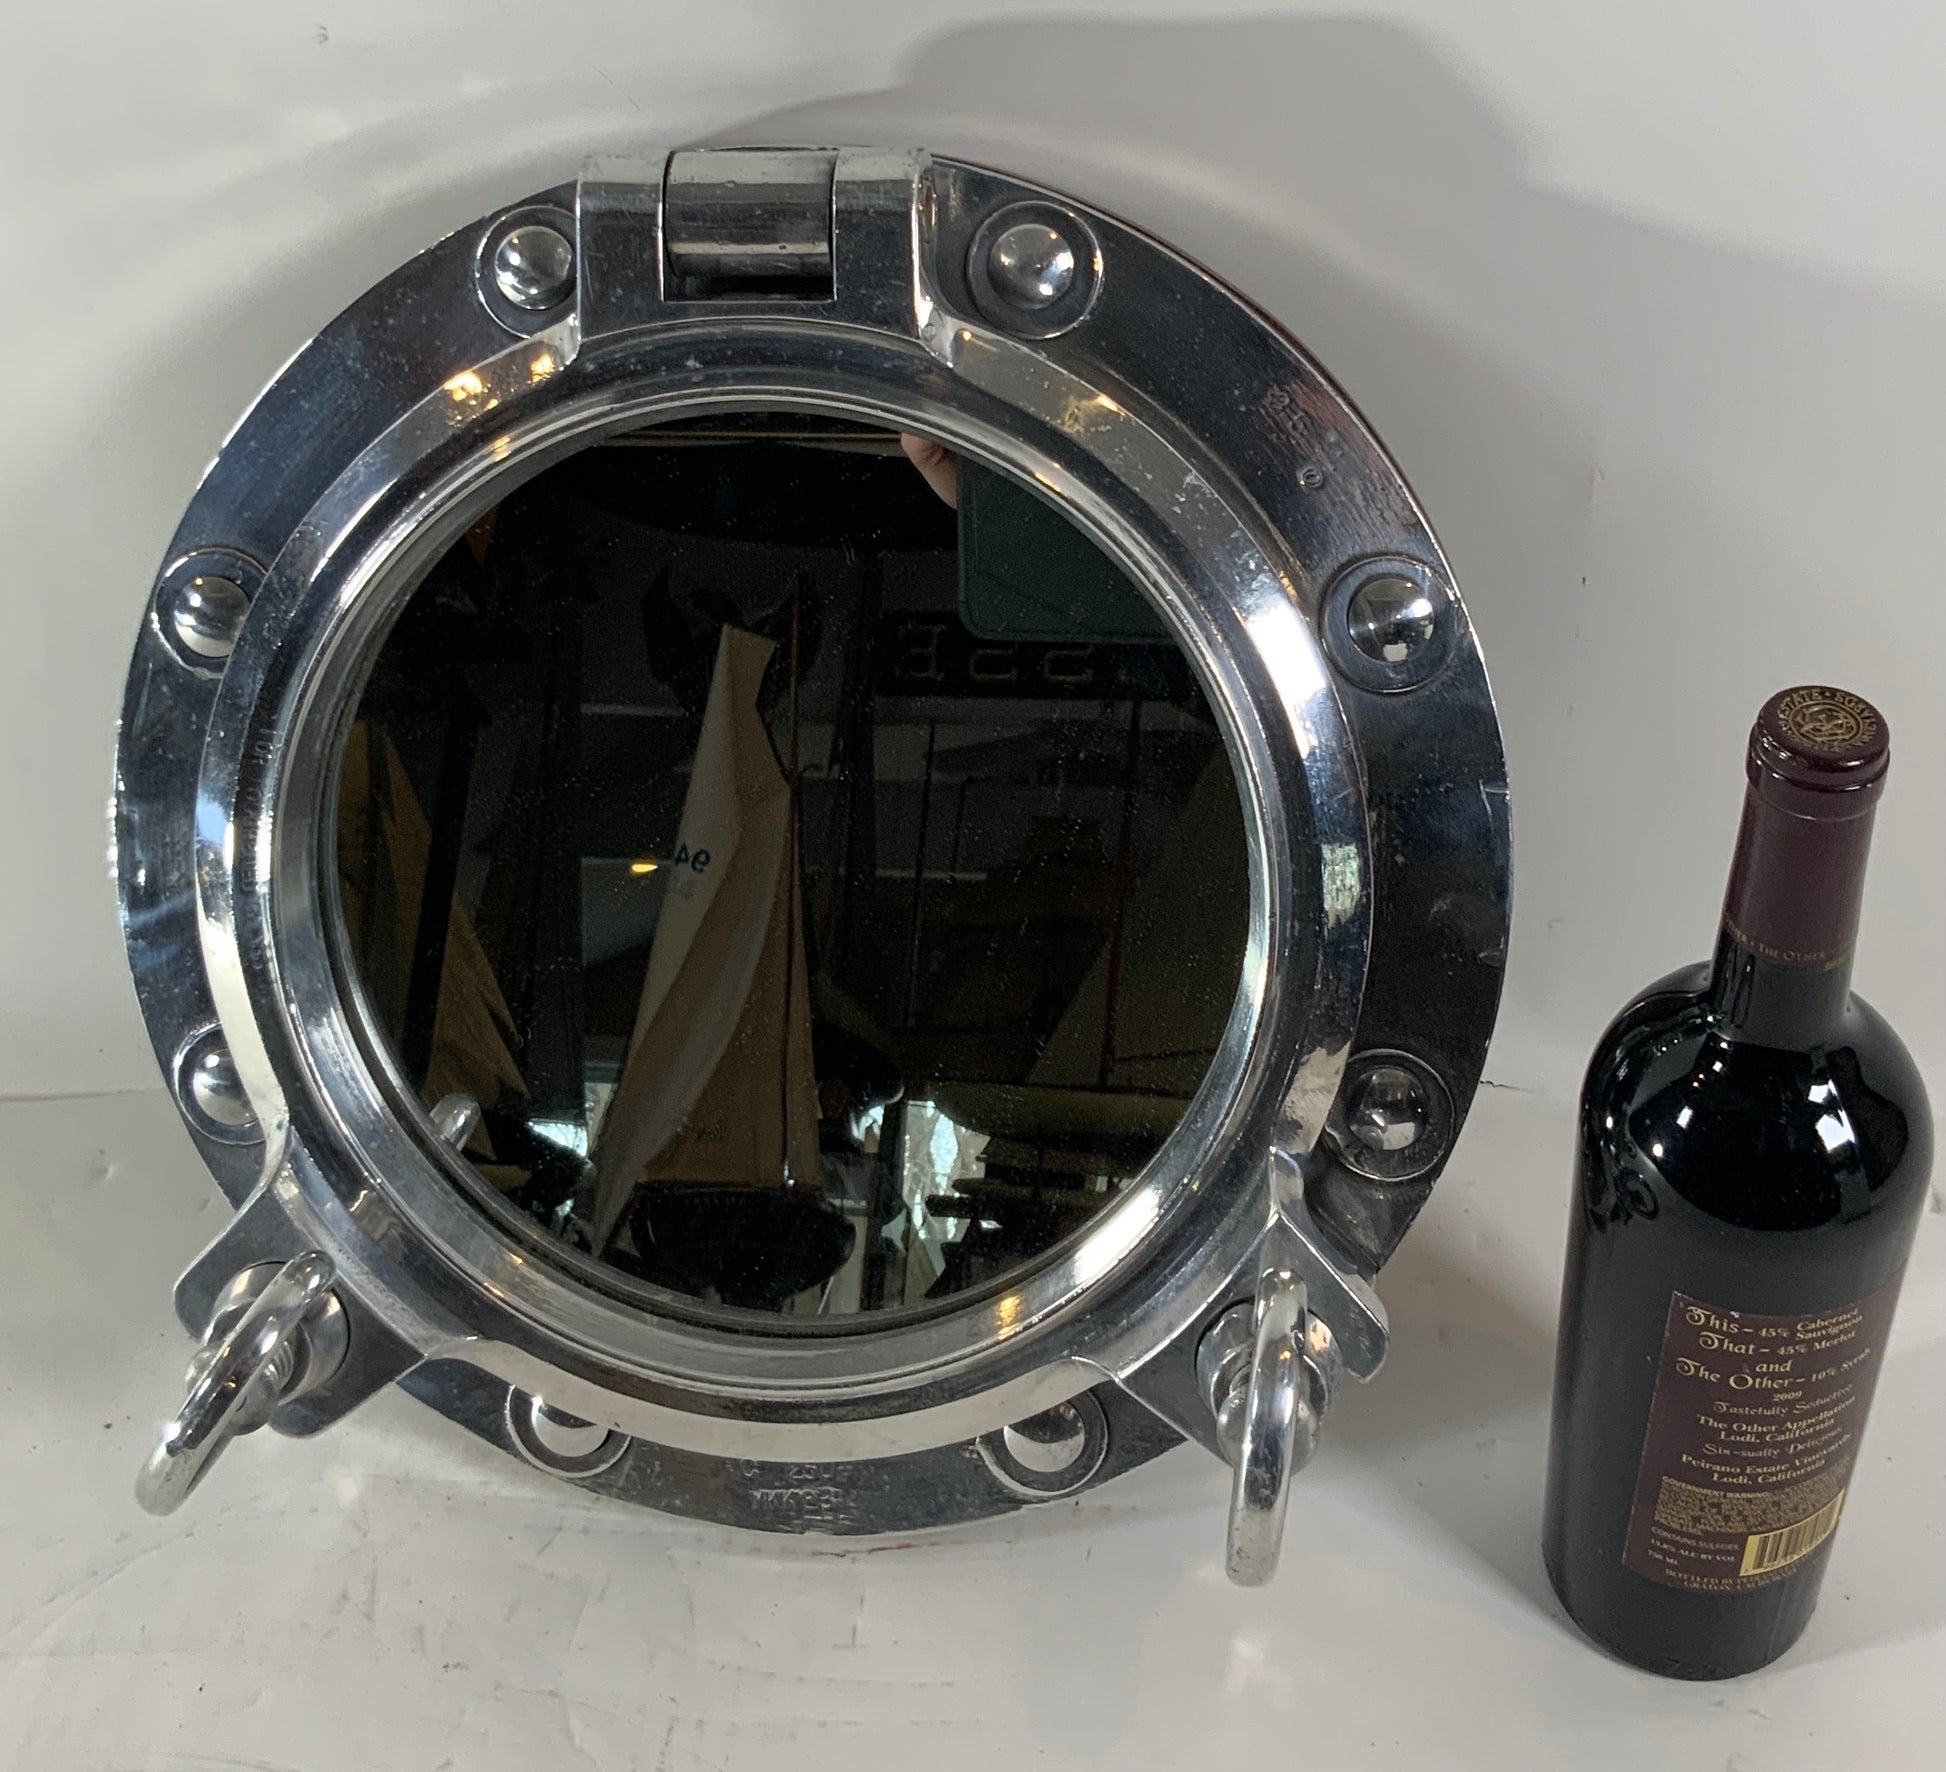 15 Inch Aluminum Ship's Porthole Mirror - Lannan Gallery